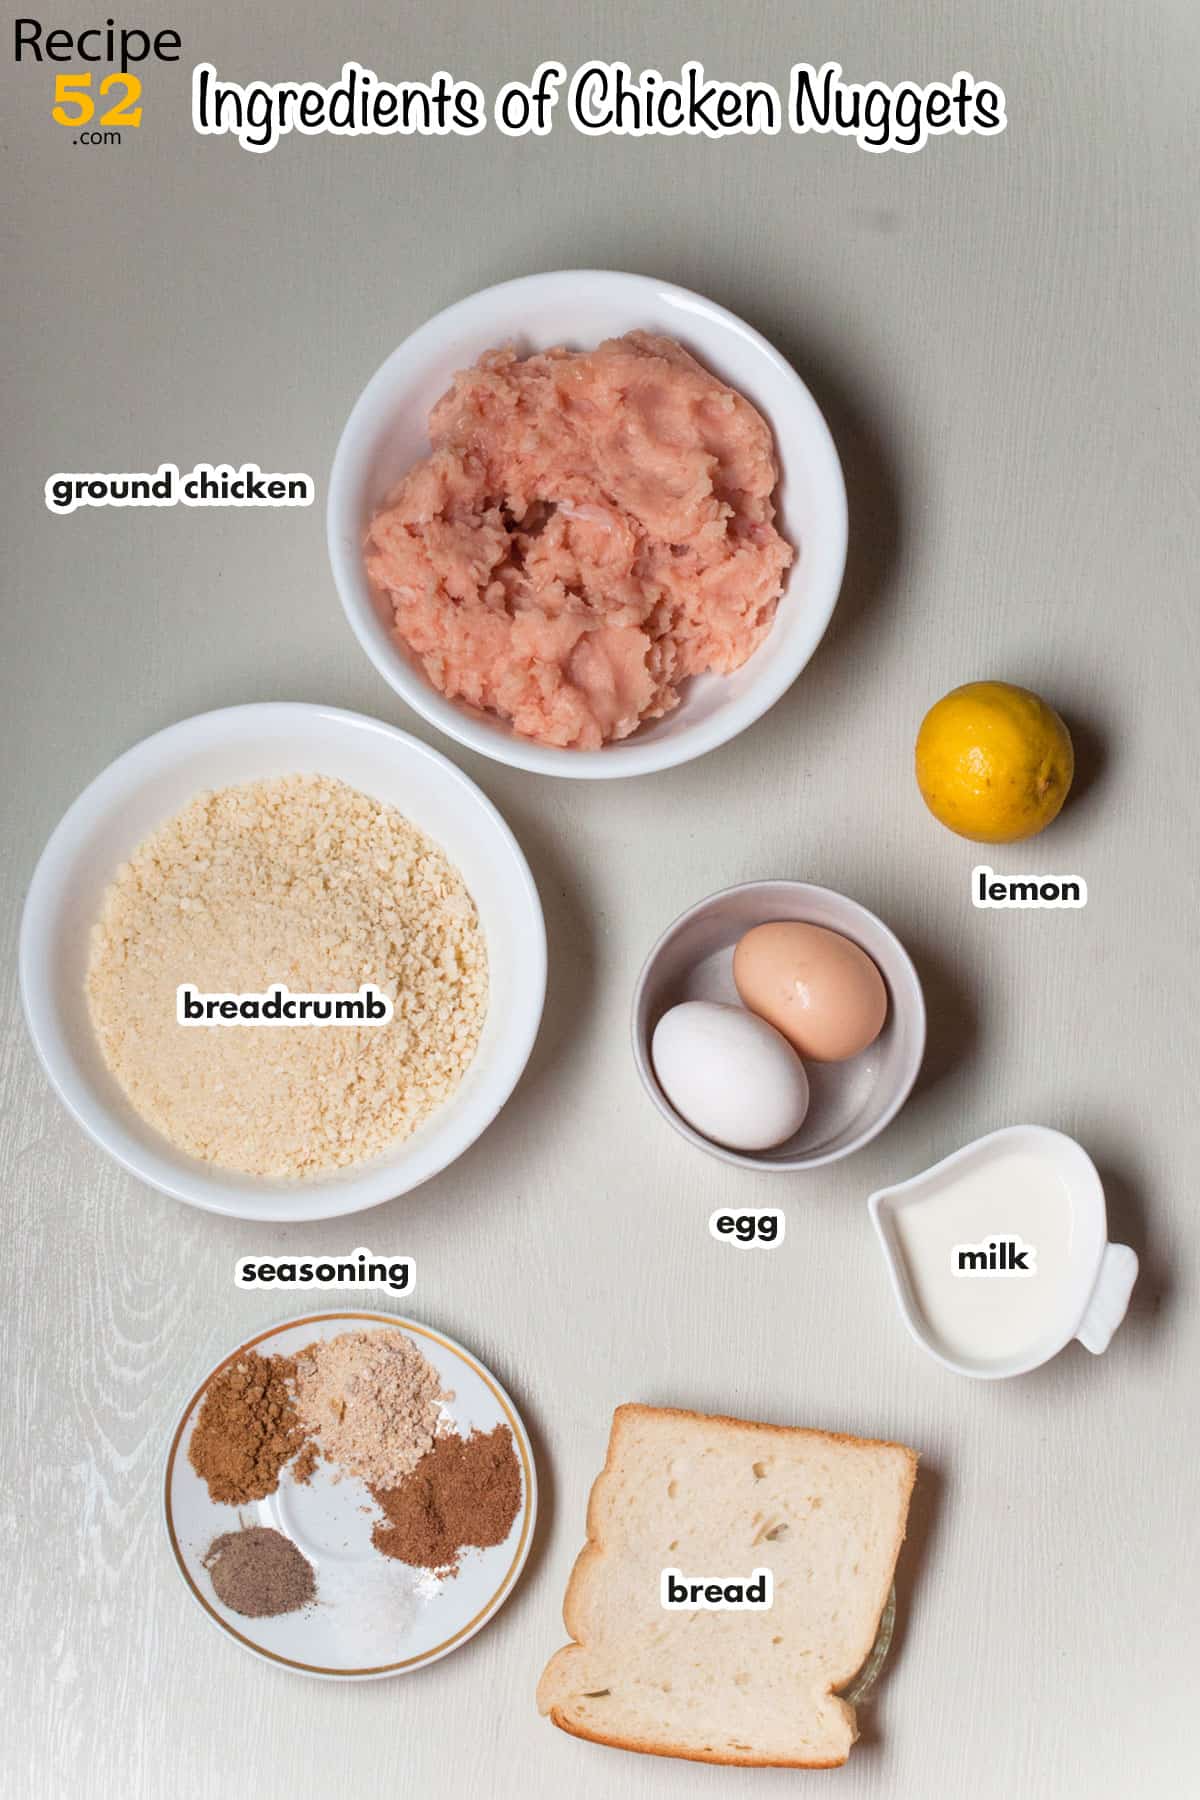 Ingredients to make chicken nuggets.